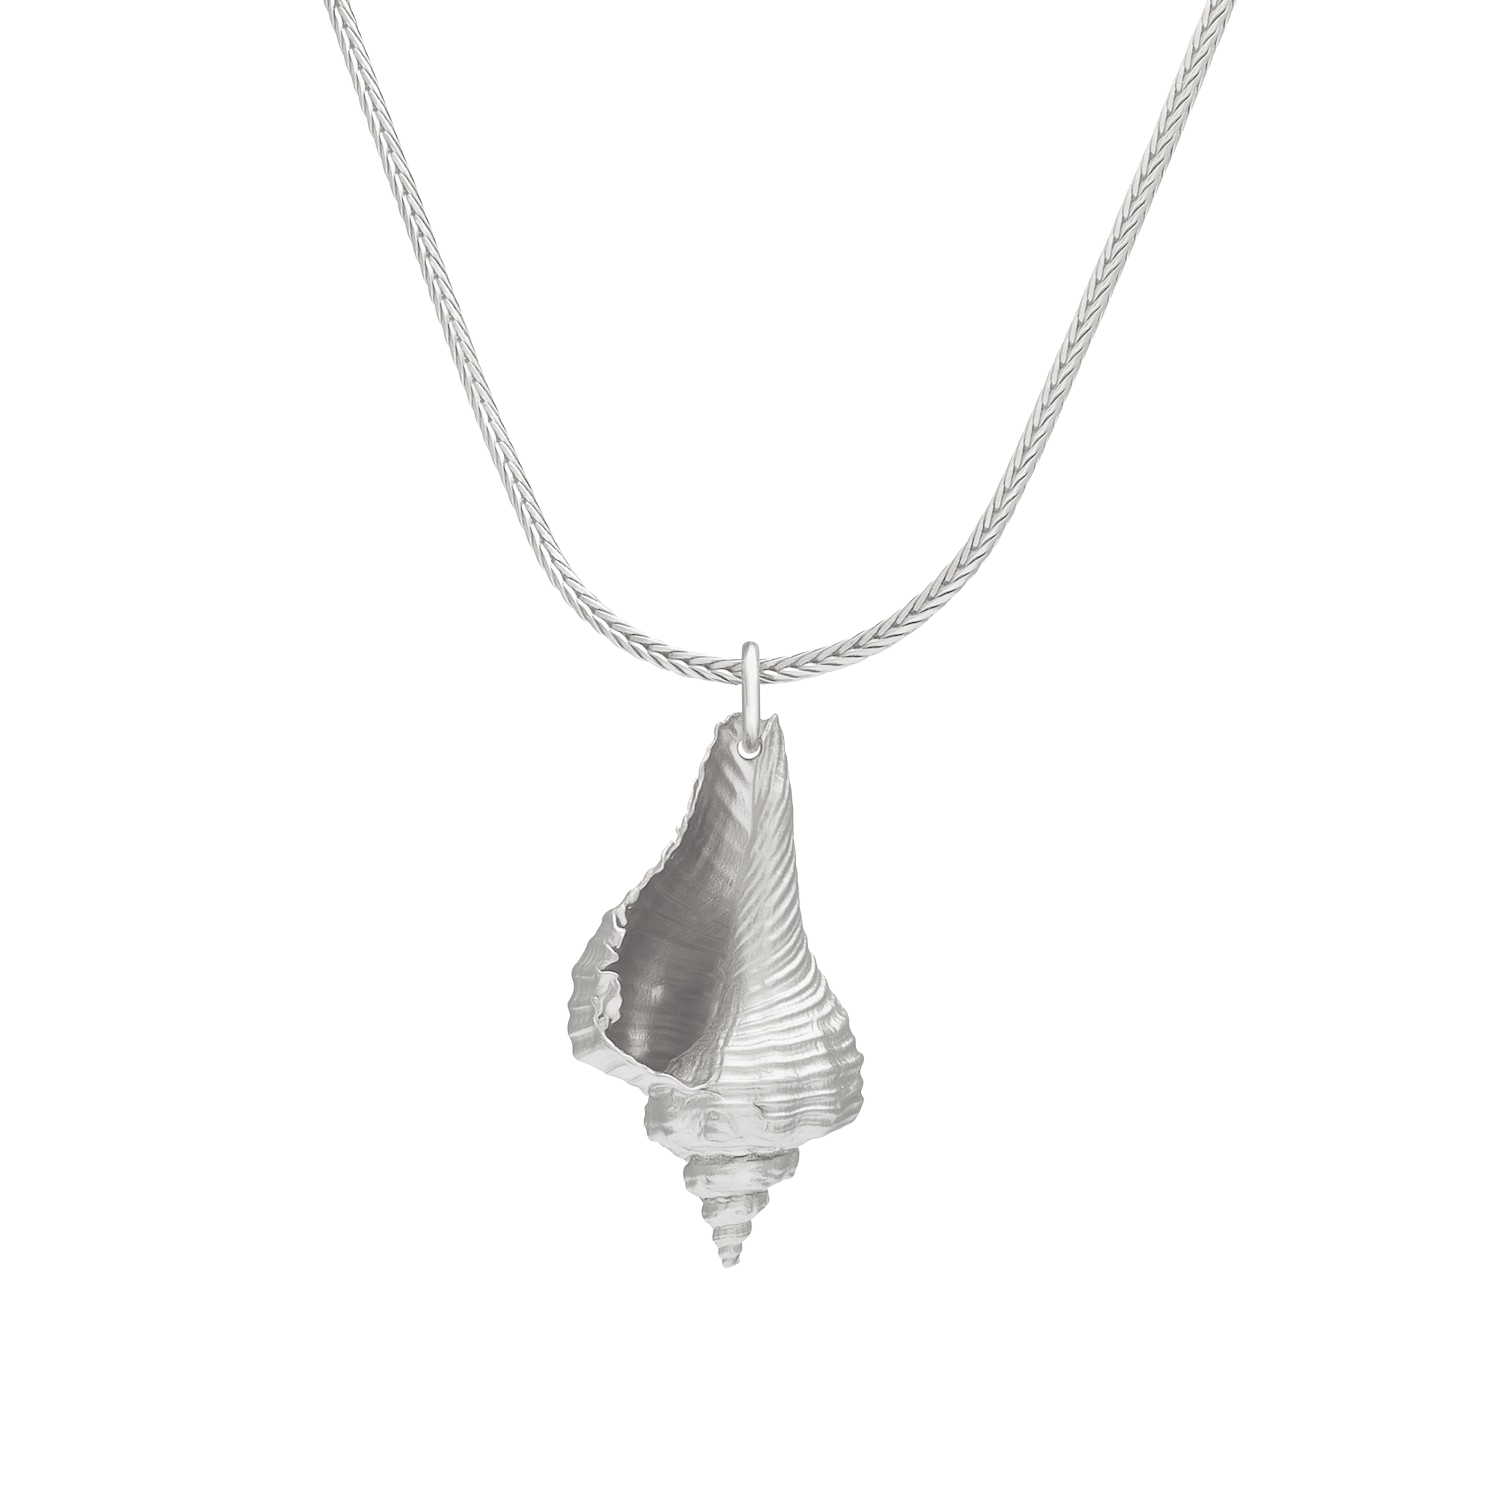 Praesidio Shell Necklace, Silver. Co-Designer Christina Macpherson